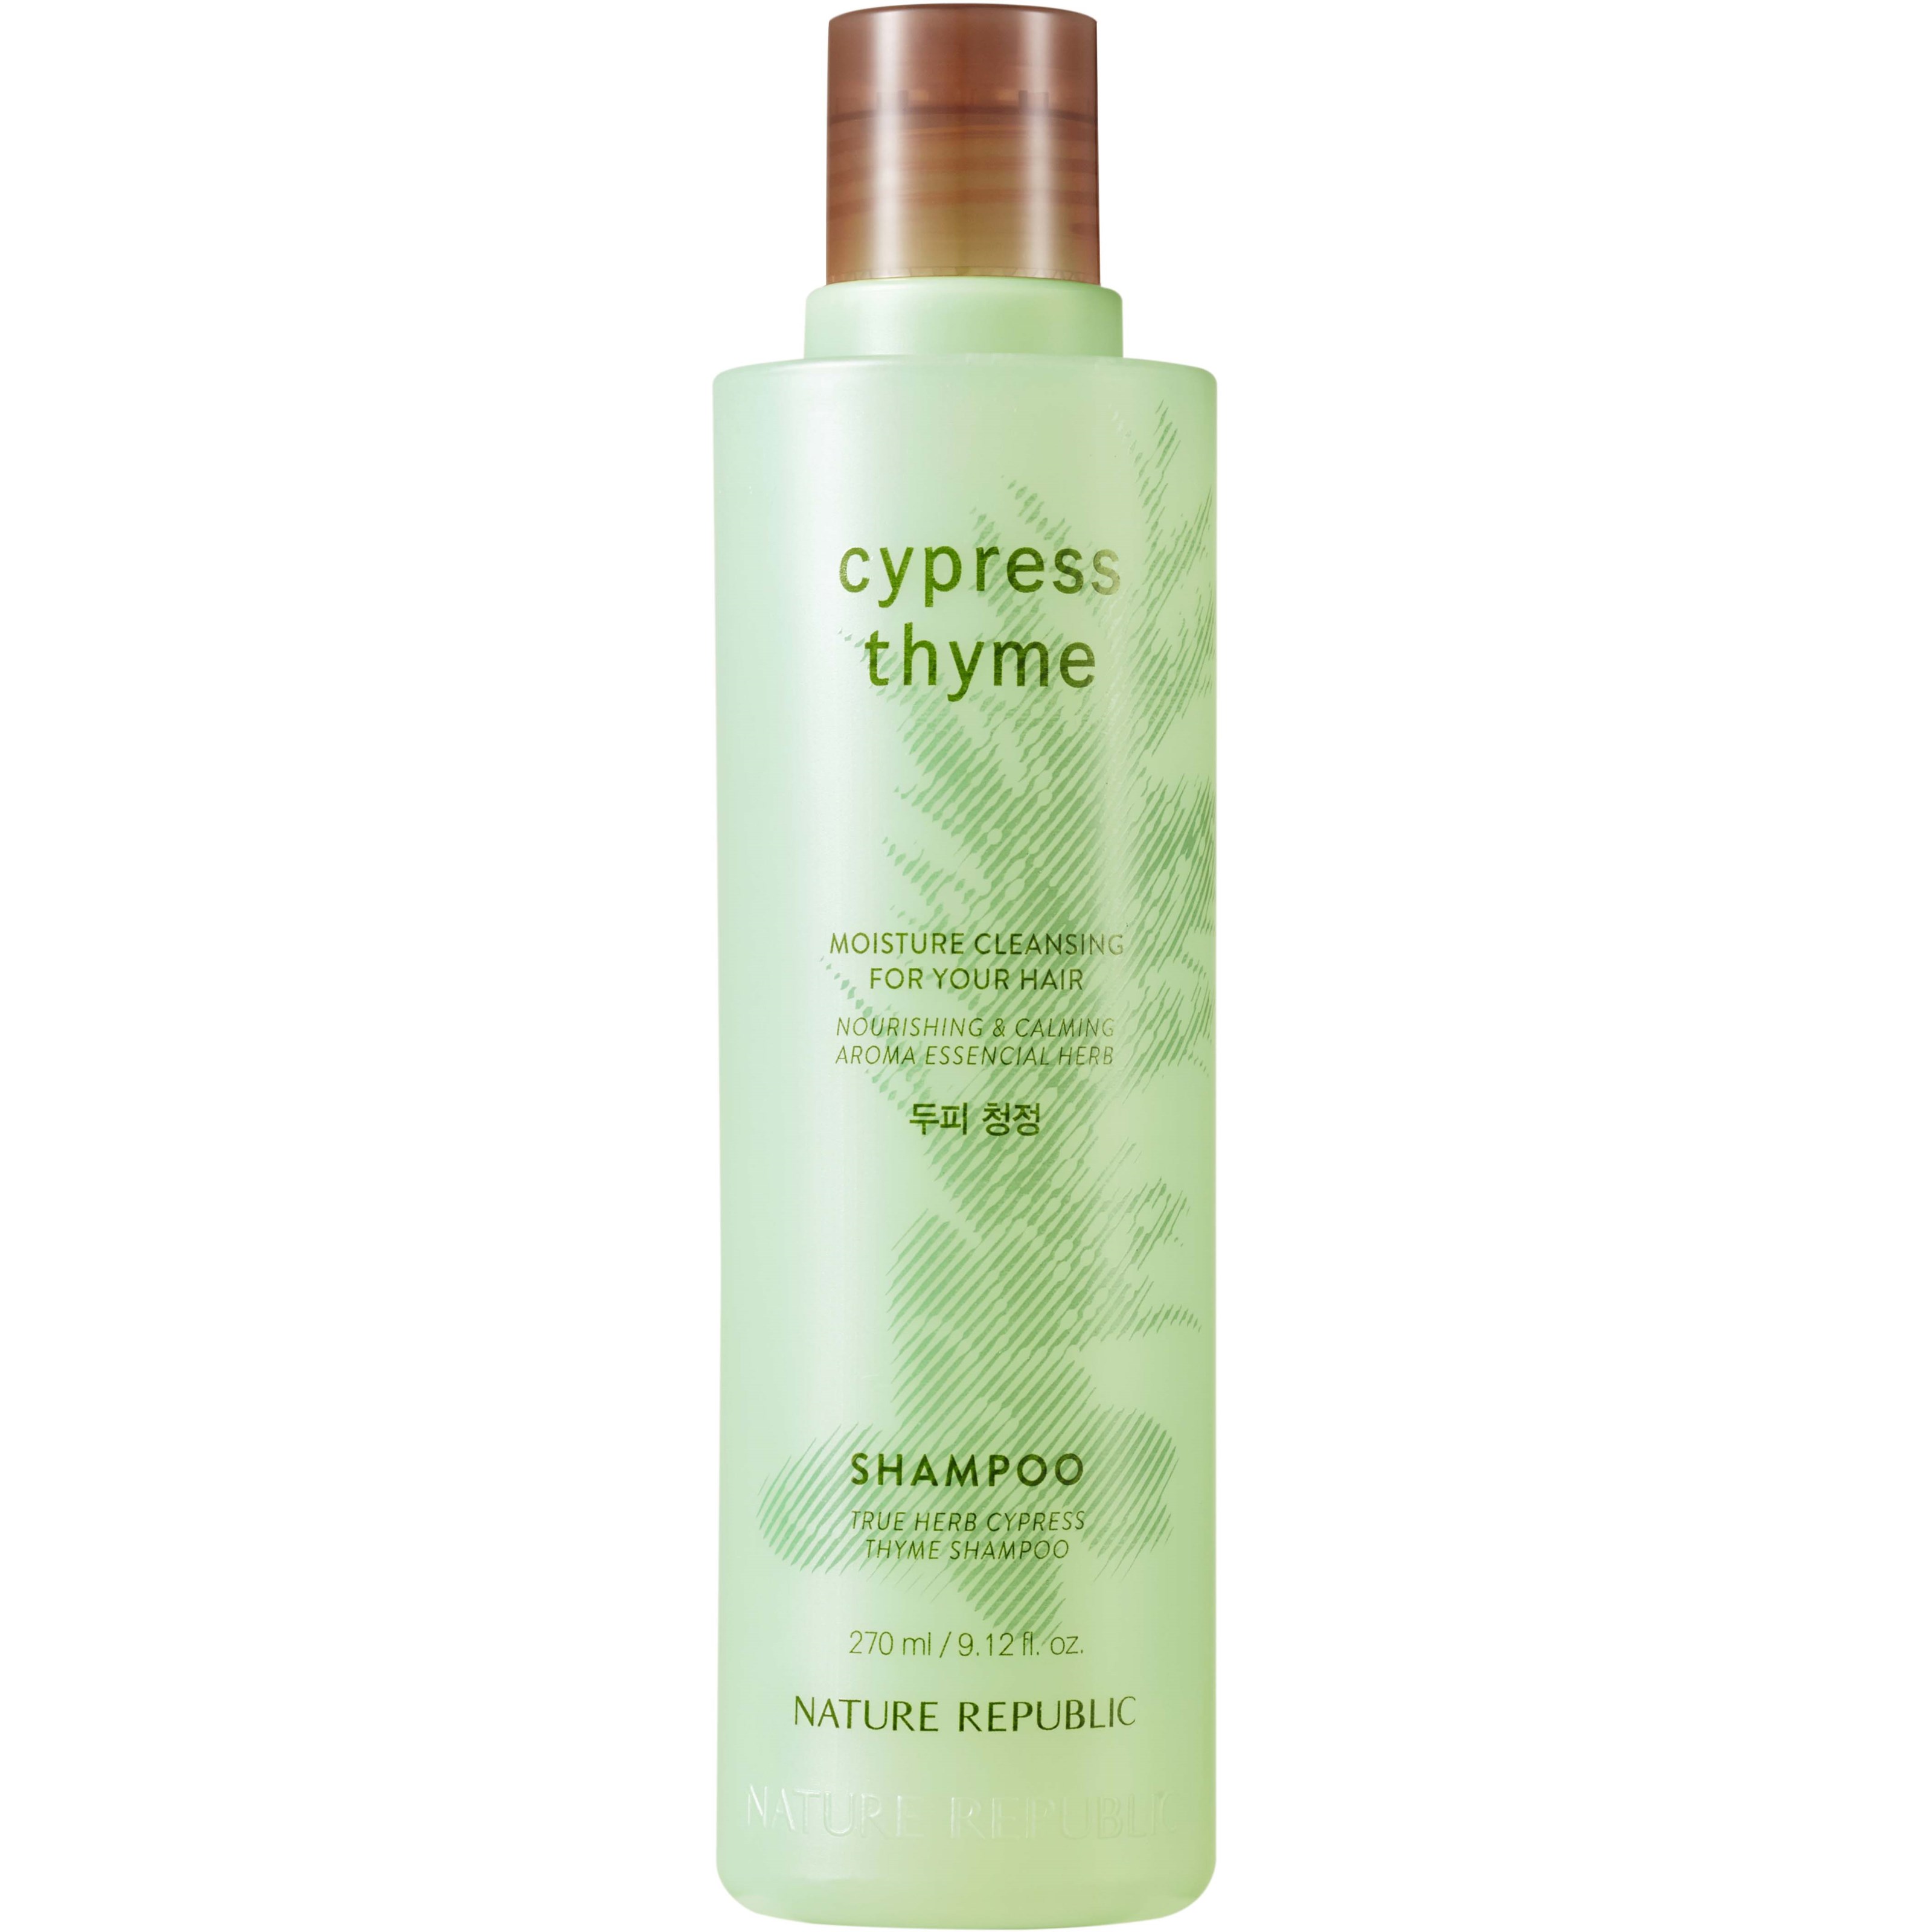 Bilde av Nature Republic True herb cypress thyme shampoo 270 Ml